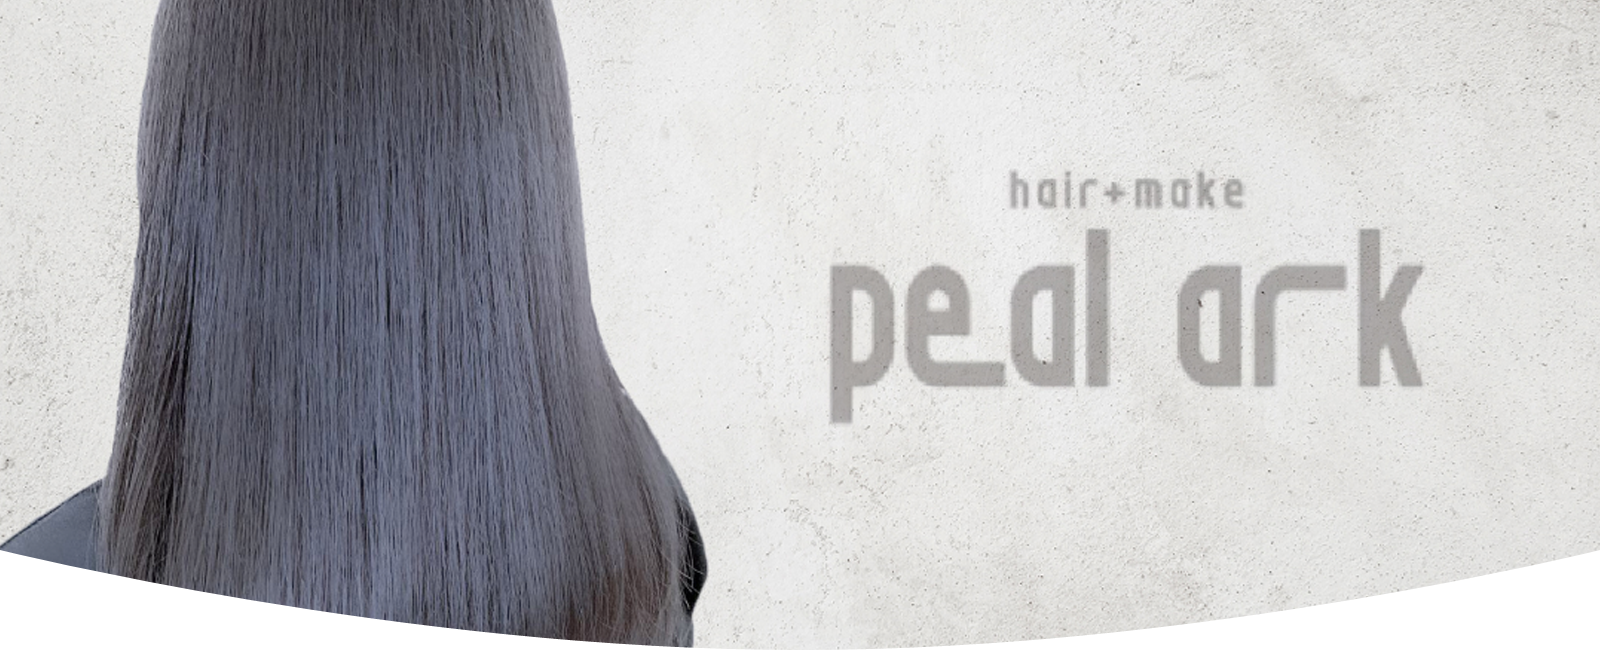 hair make peal ark